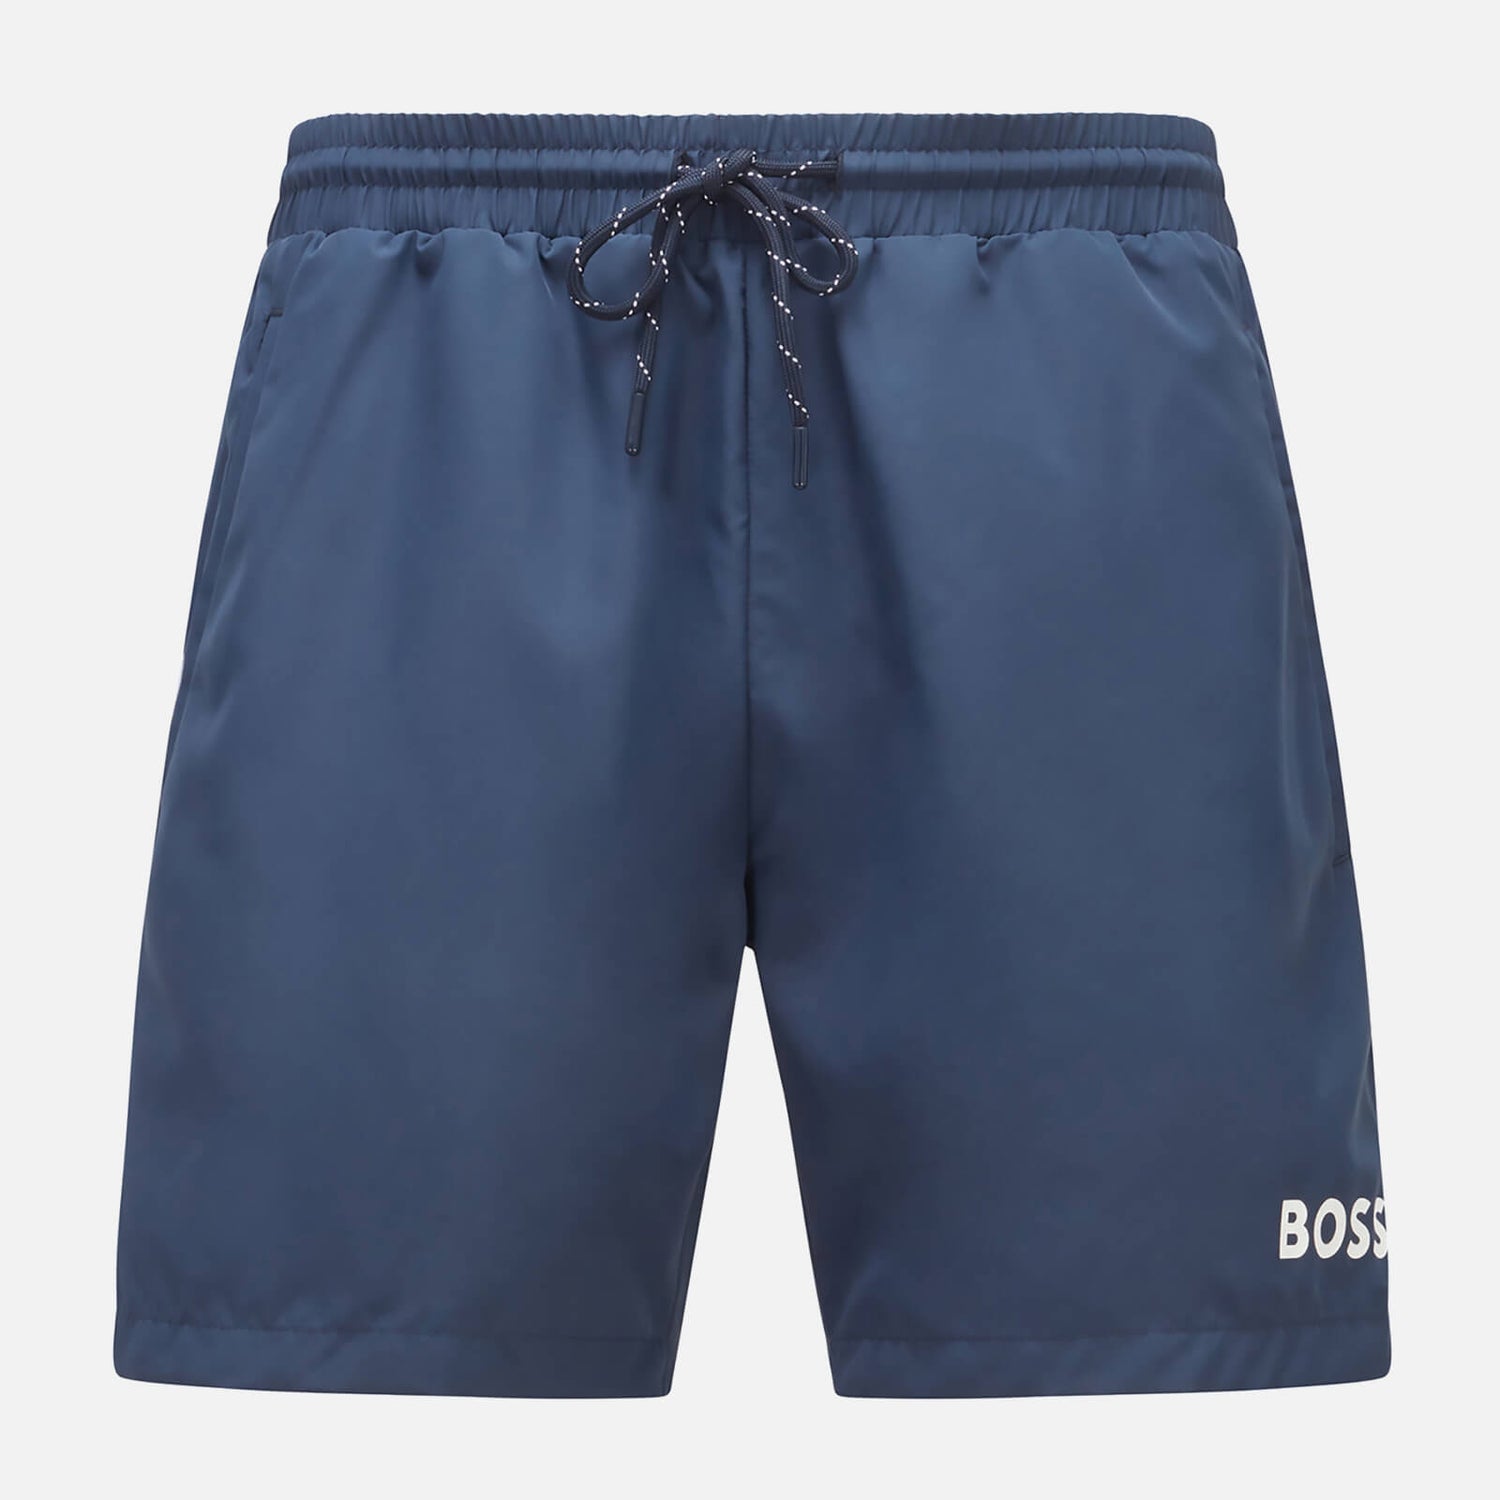 BOSS Bodywear Men's Starfish Swim Shorts - Navy - L